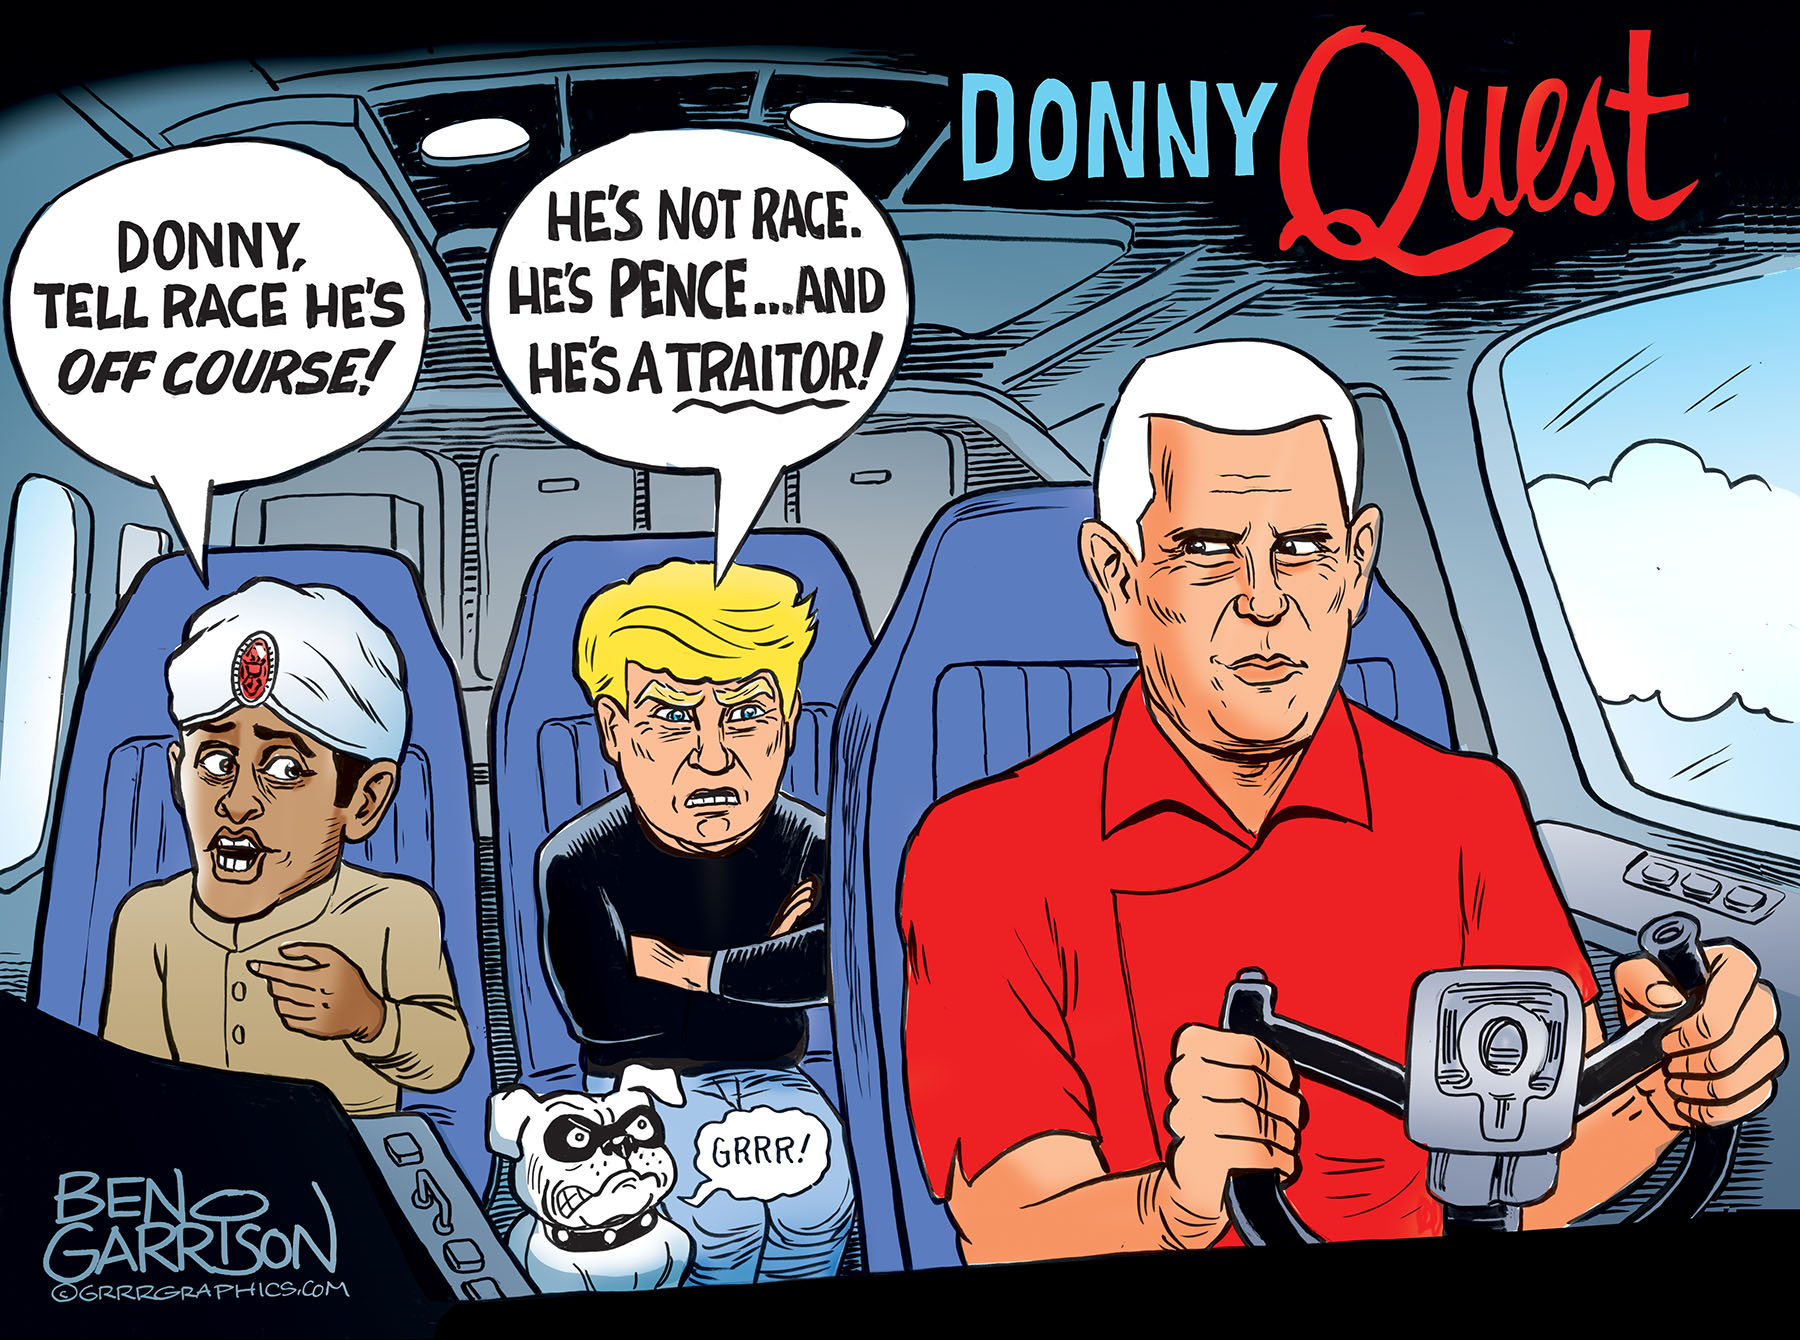 Trump Pence Donny Quest